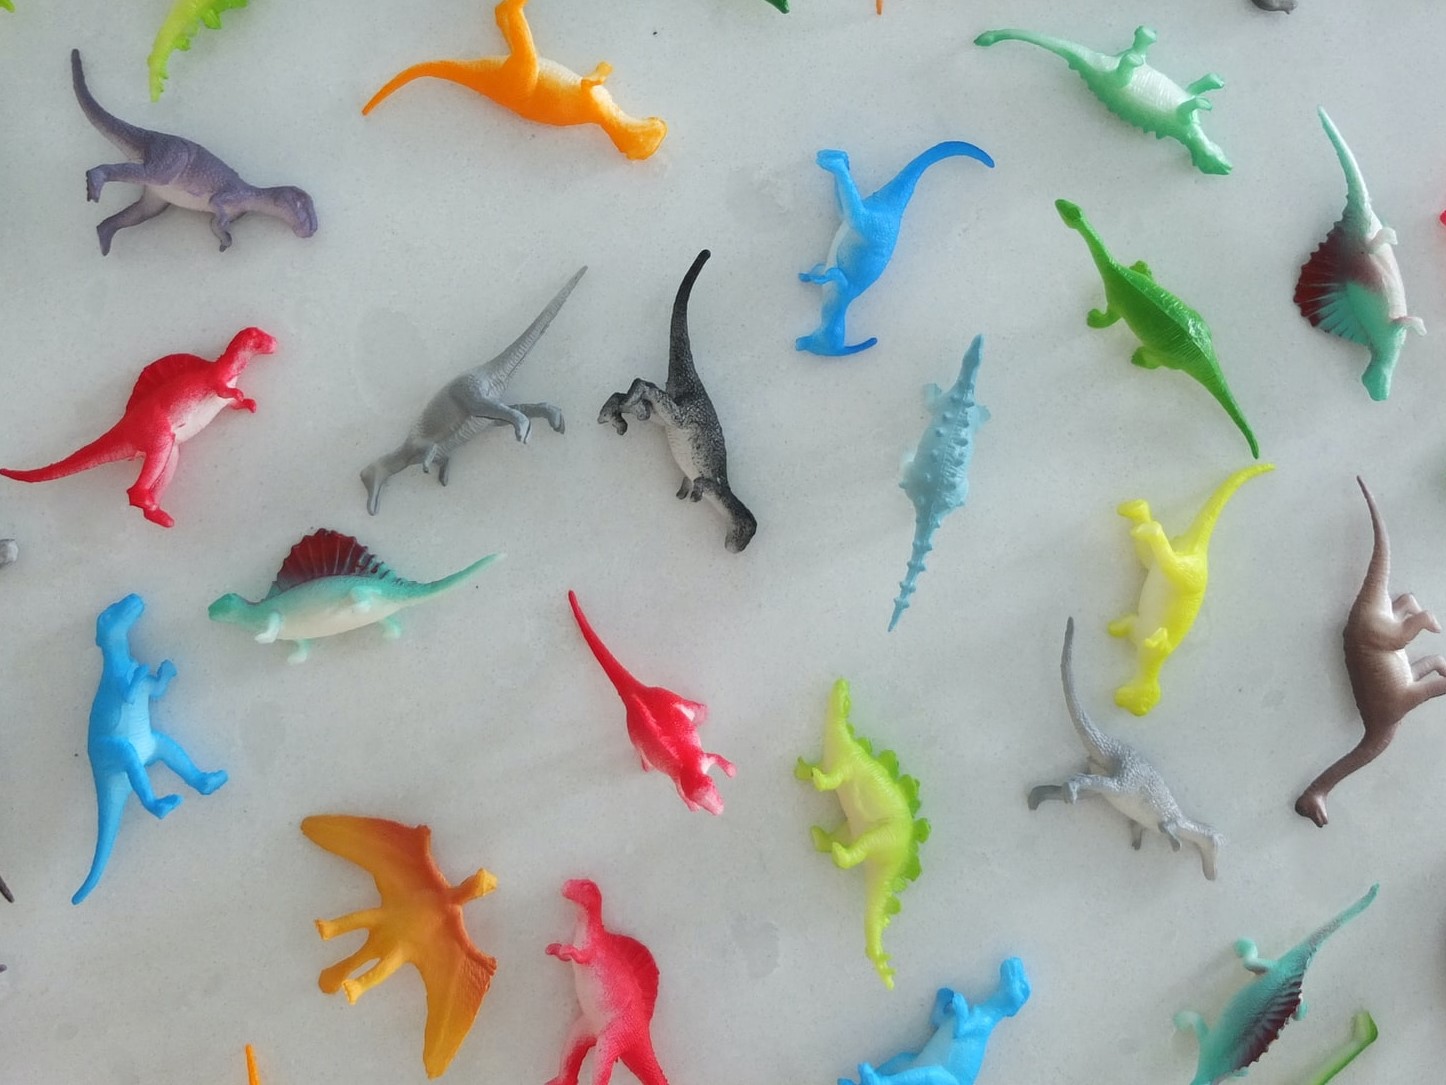 Small dinosaur toys